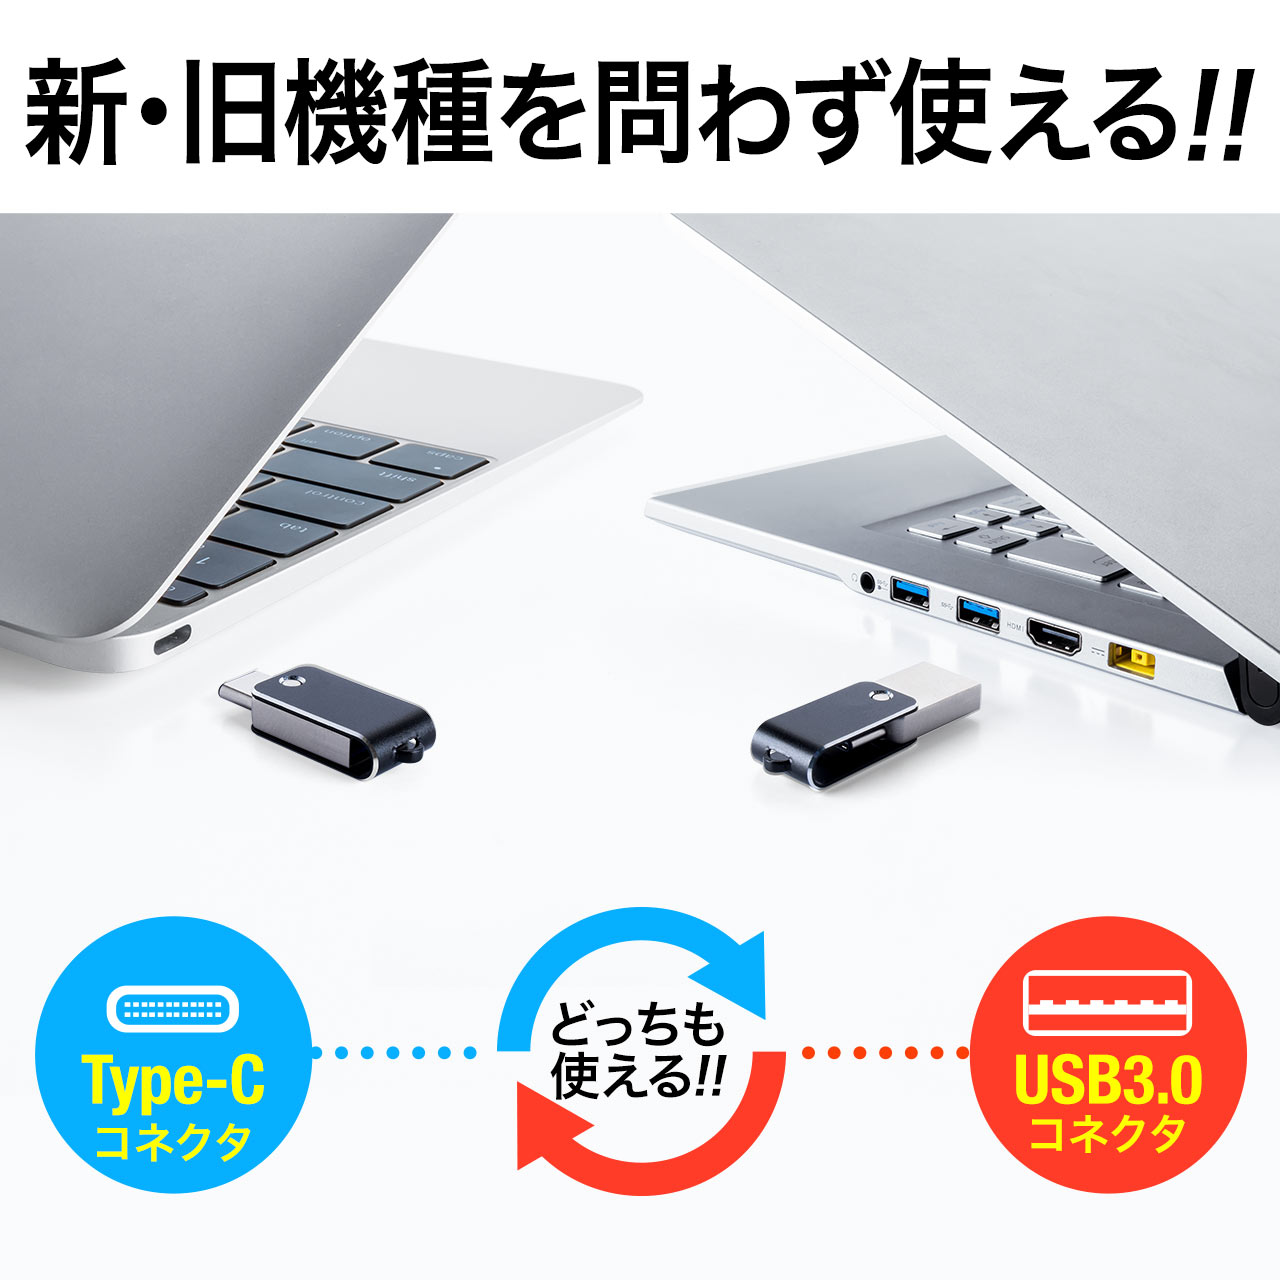 USBiUSB3.1/Type CEUSB3.0E16GBEELbvXj 600-3TC16GN